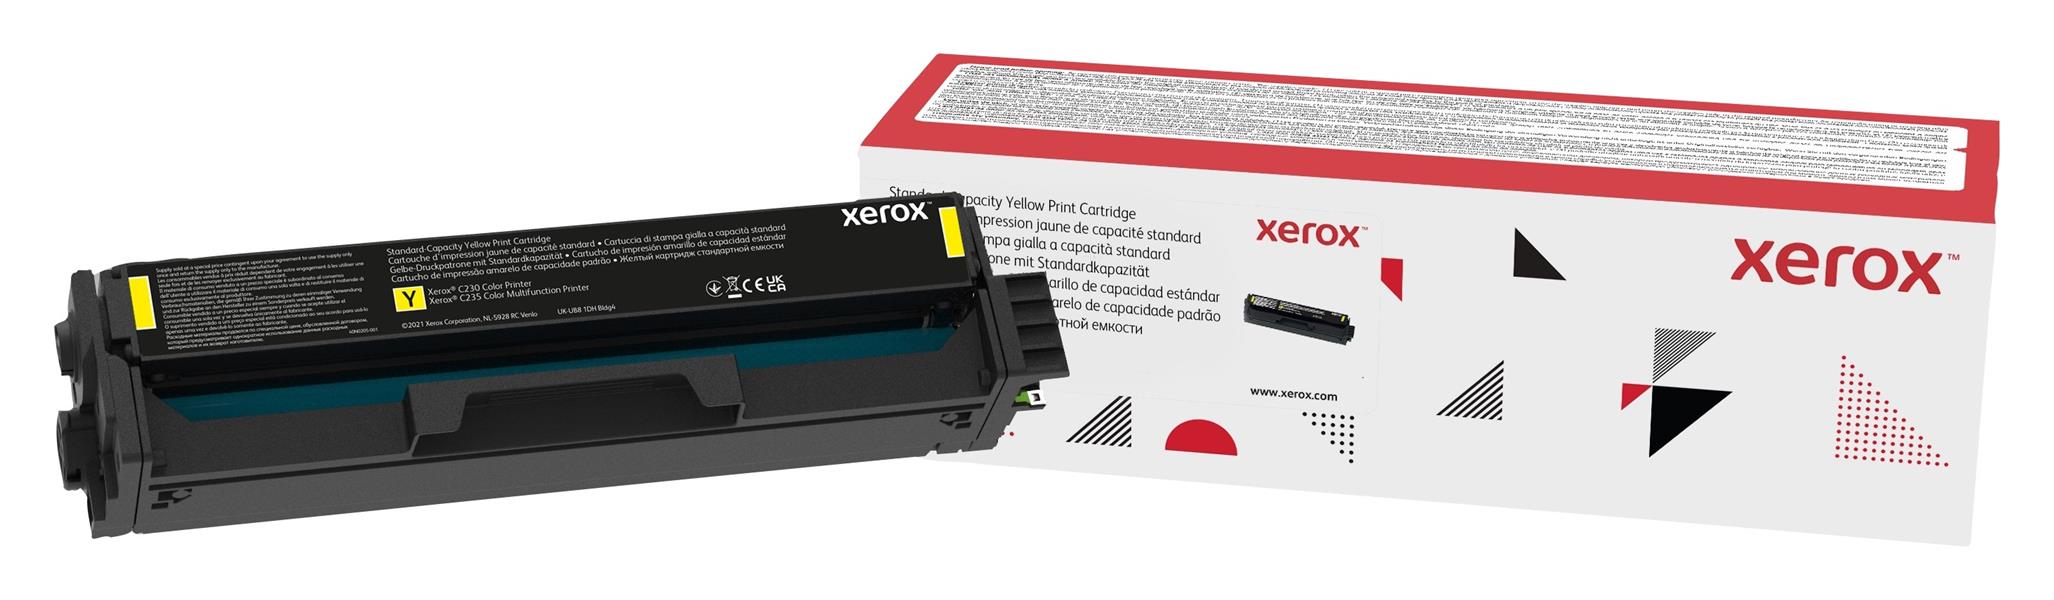 Xerox C230/C235 standaard capaciteit tonercassette, geel (1.500 paginas)